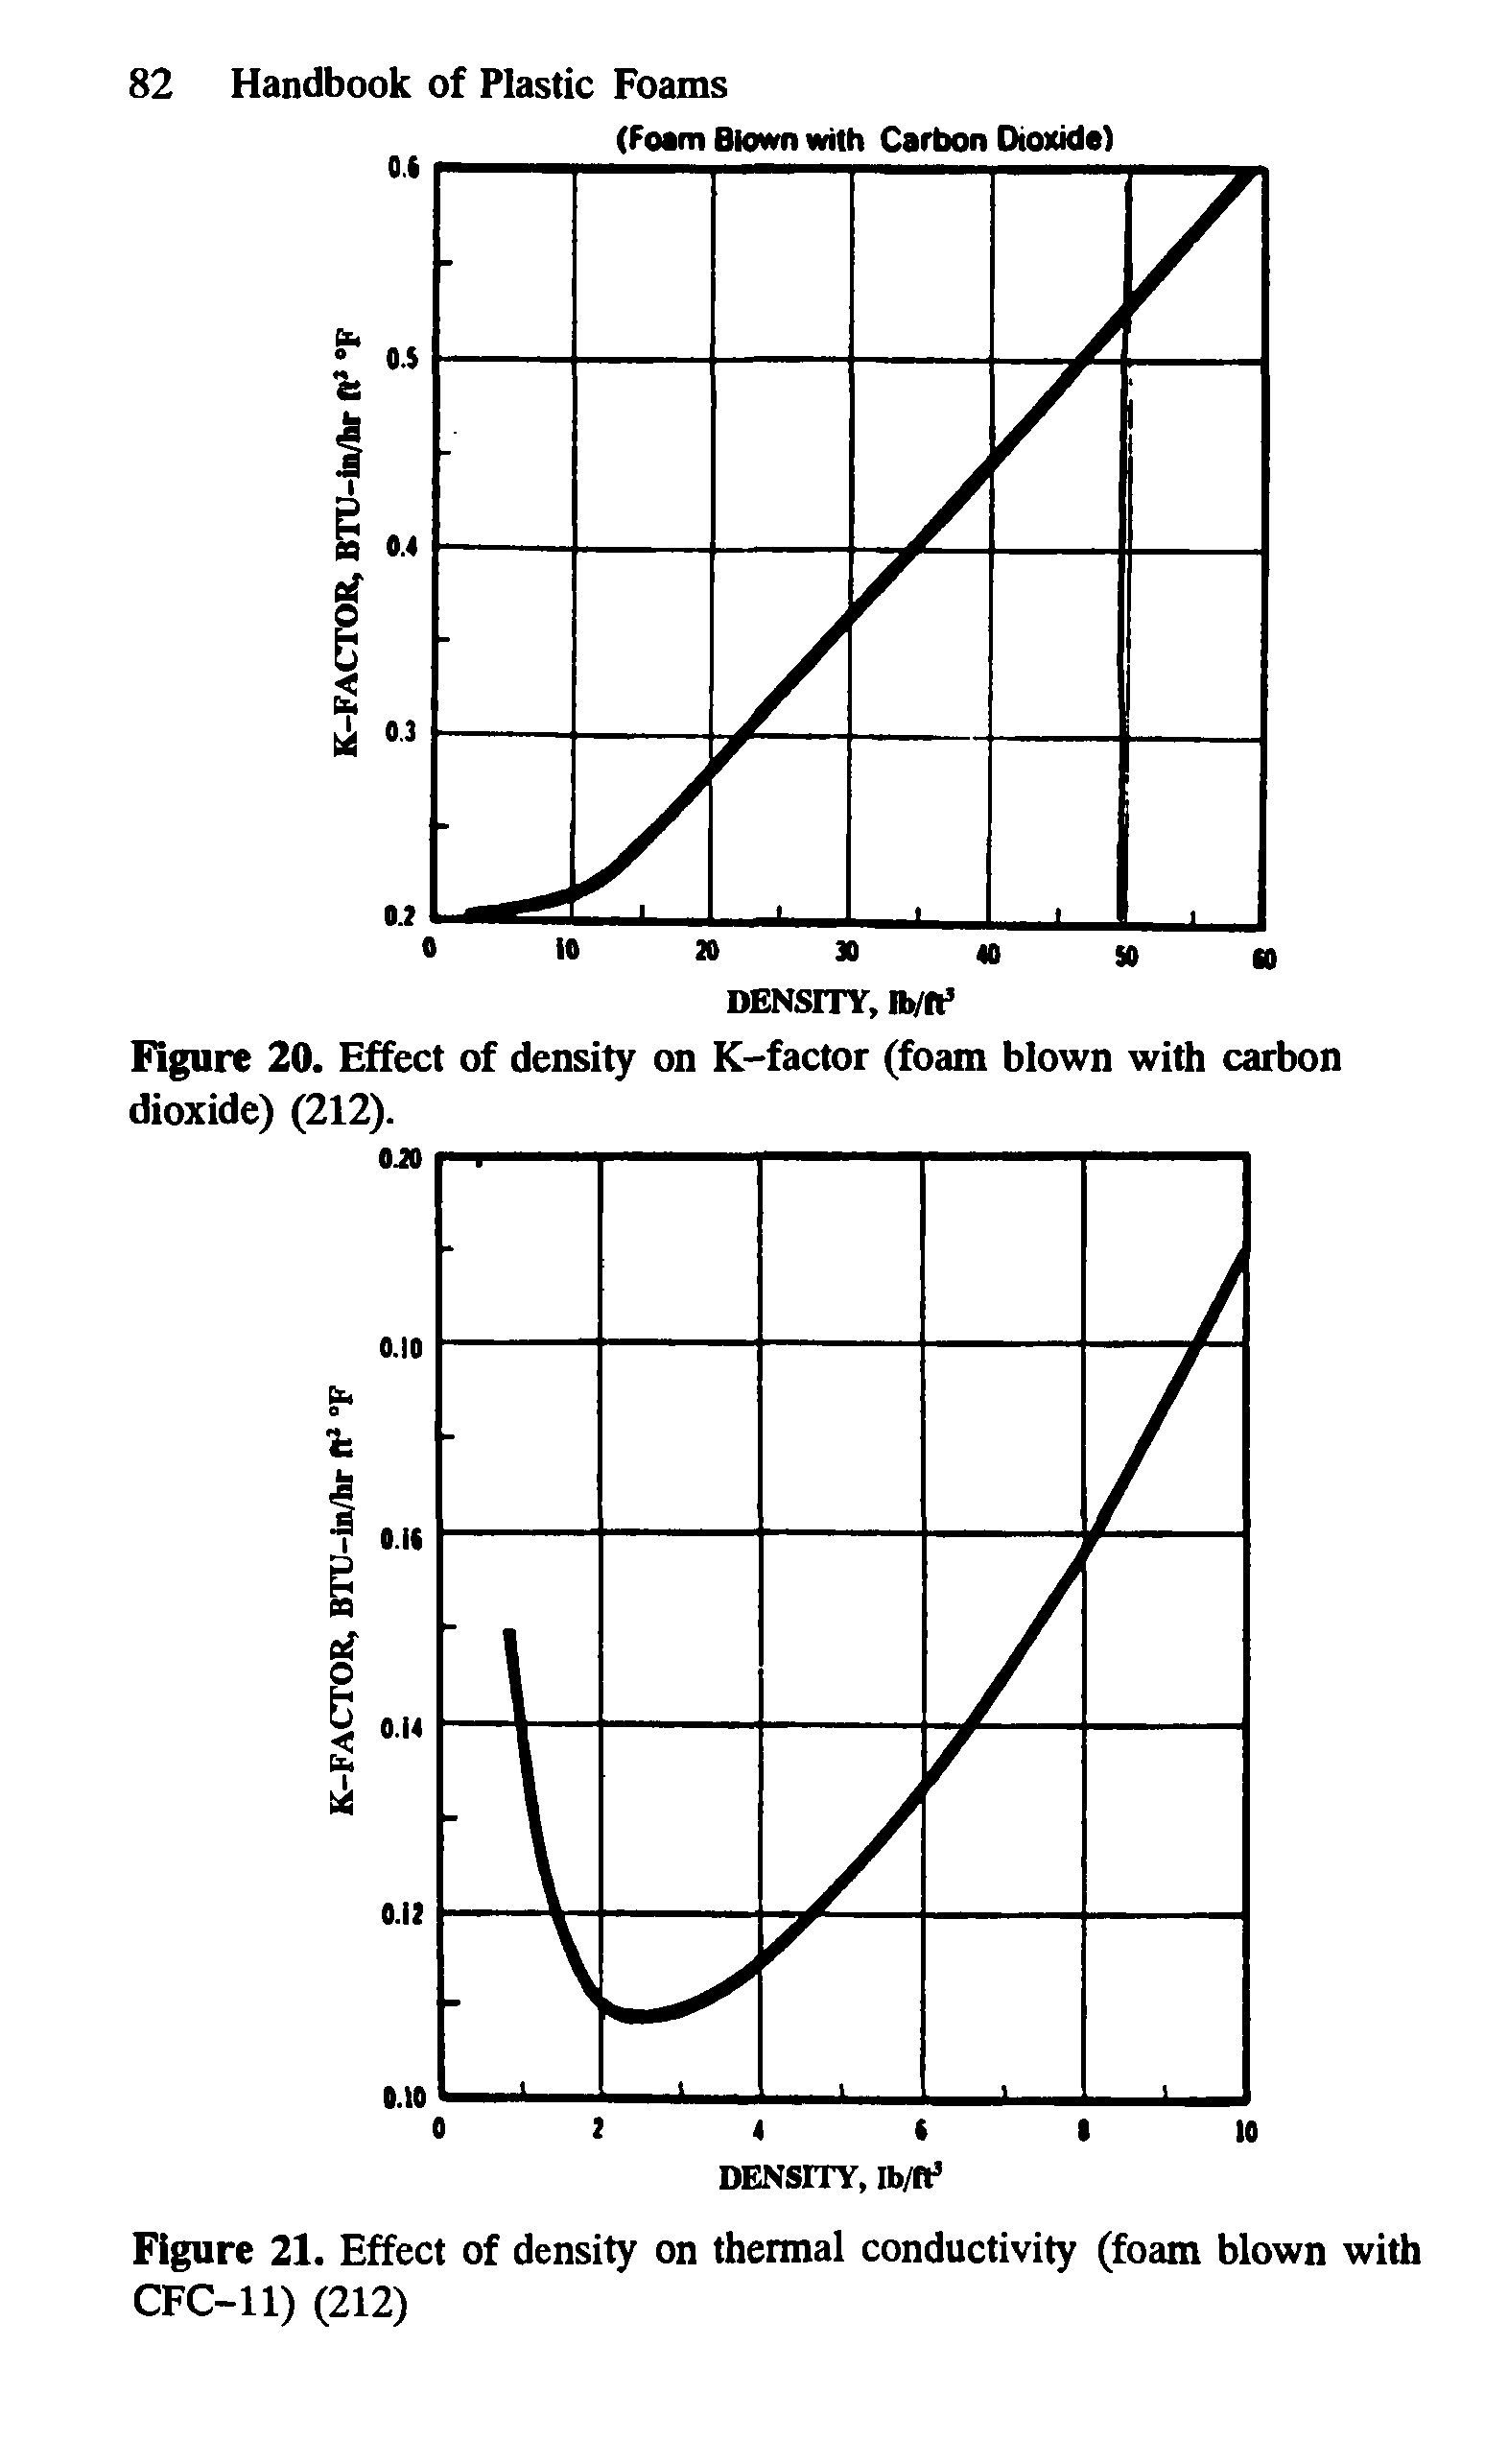 Figure 20. Effect of density on K-factor (foam blown with carbon dioxide) (212).